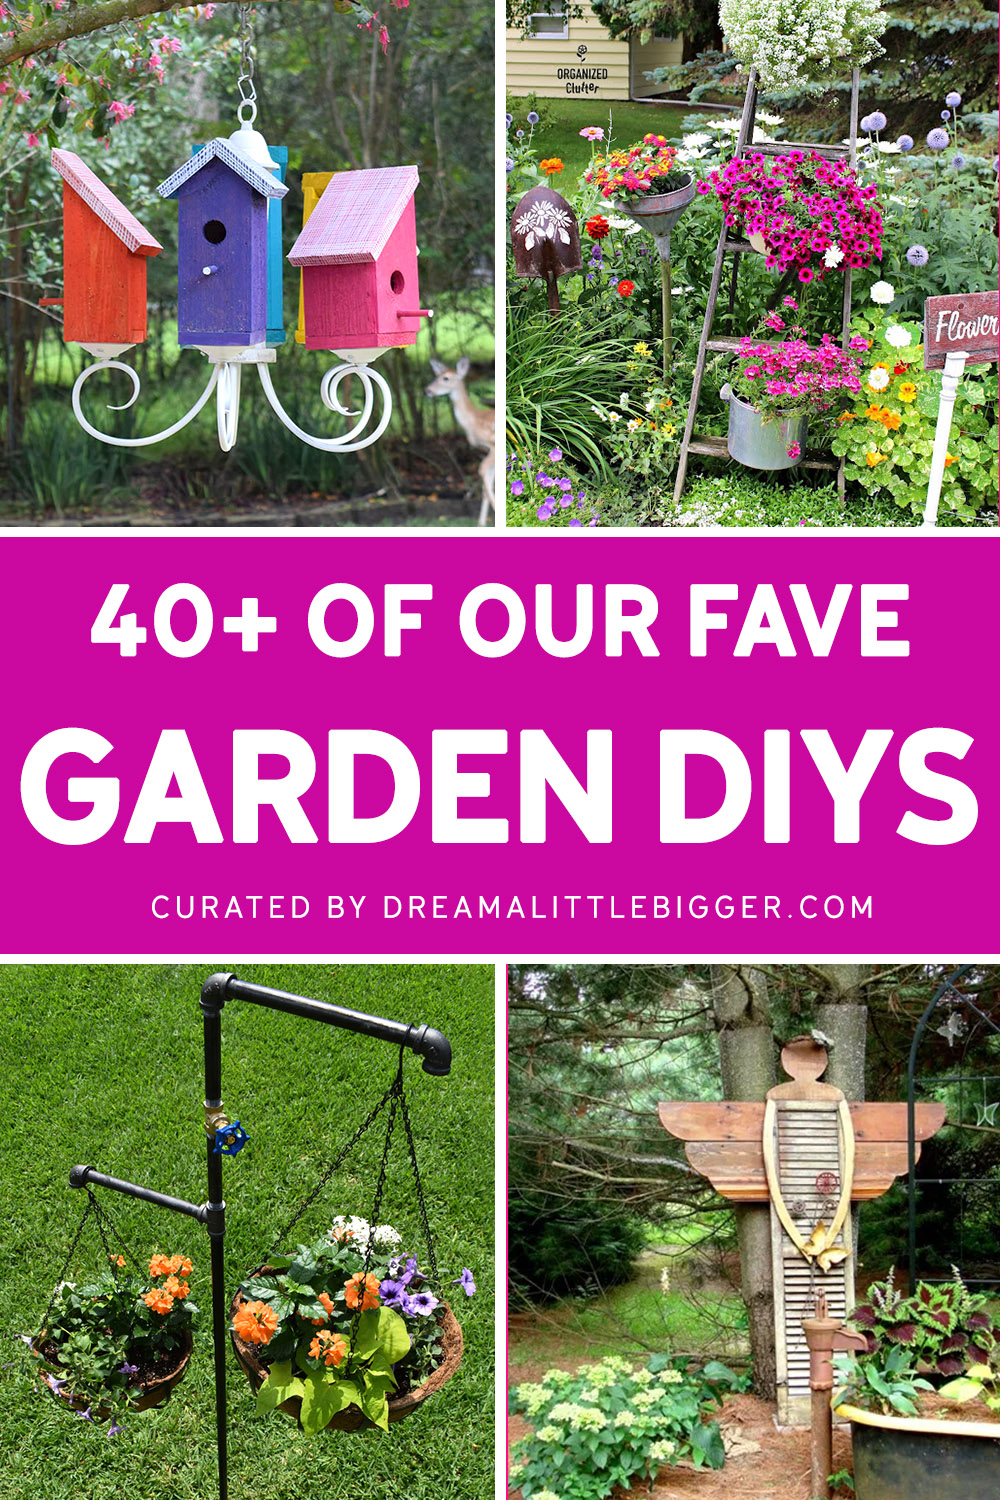 10 Thrifted Décor Ideas for Your Garden